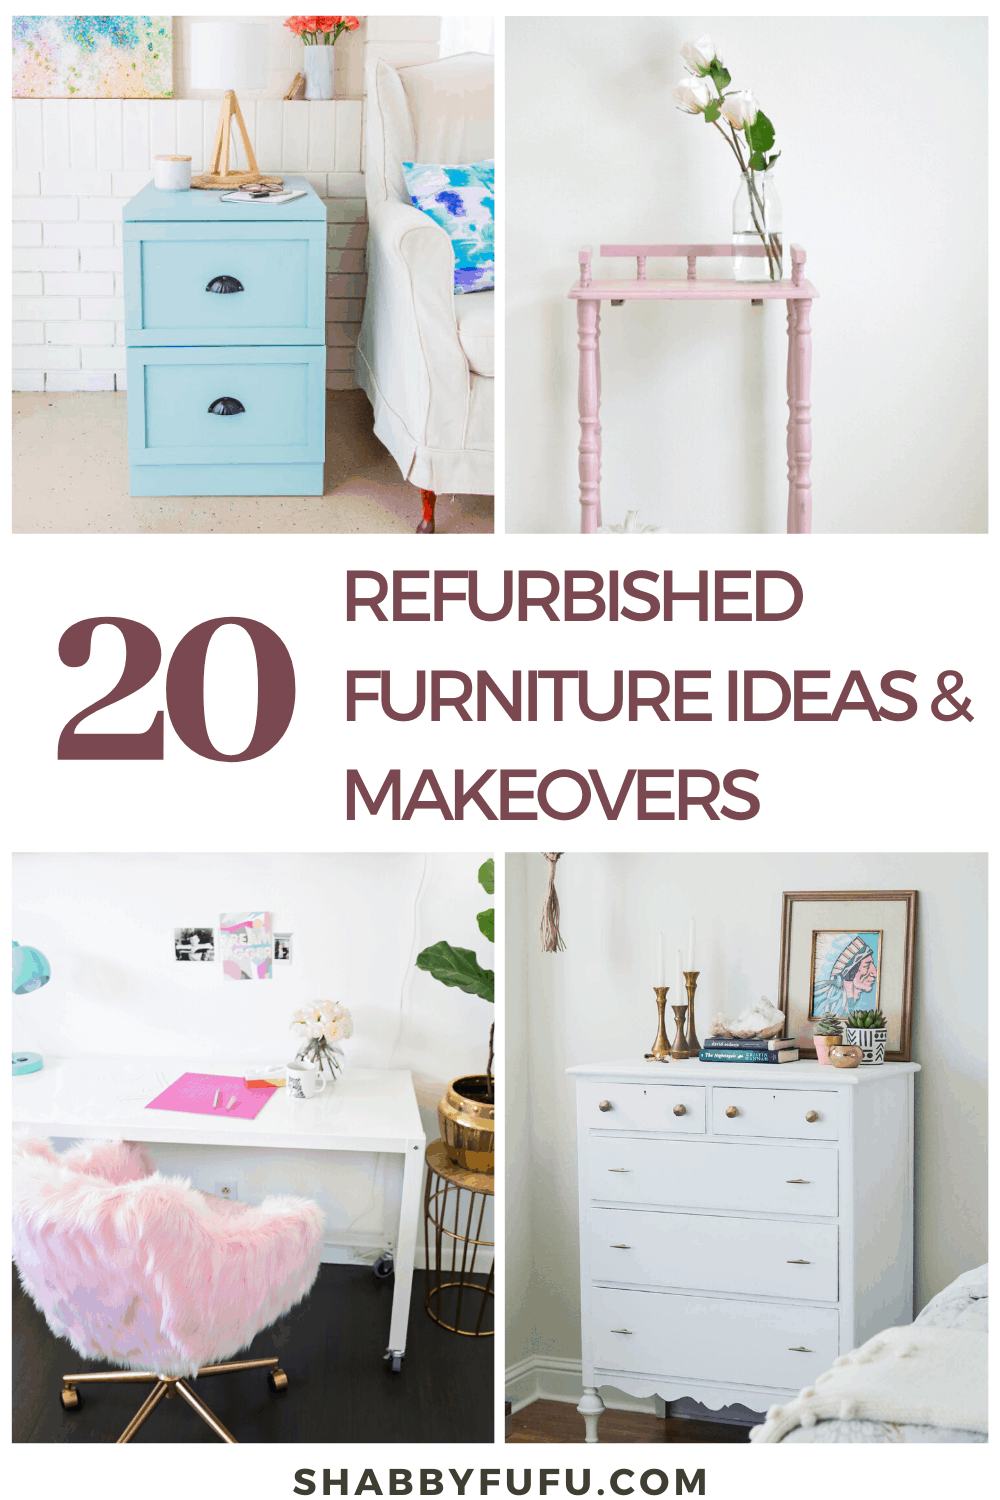 12 Refurbished Furniture Ideas And Makeovers   shabbyfufu.com